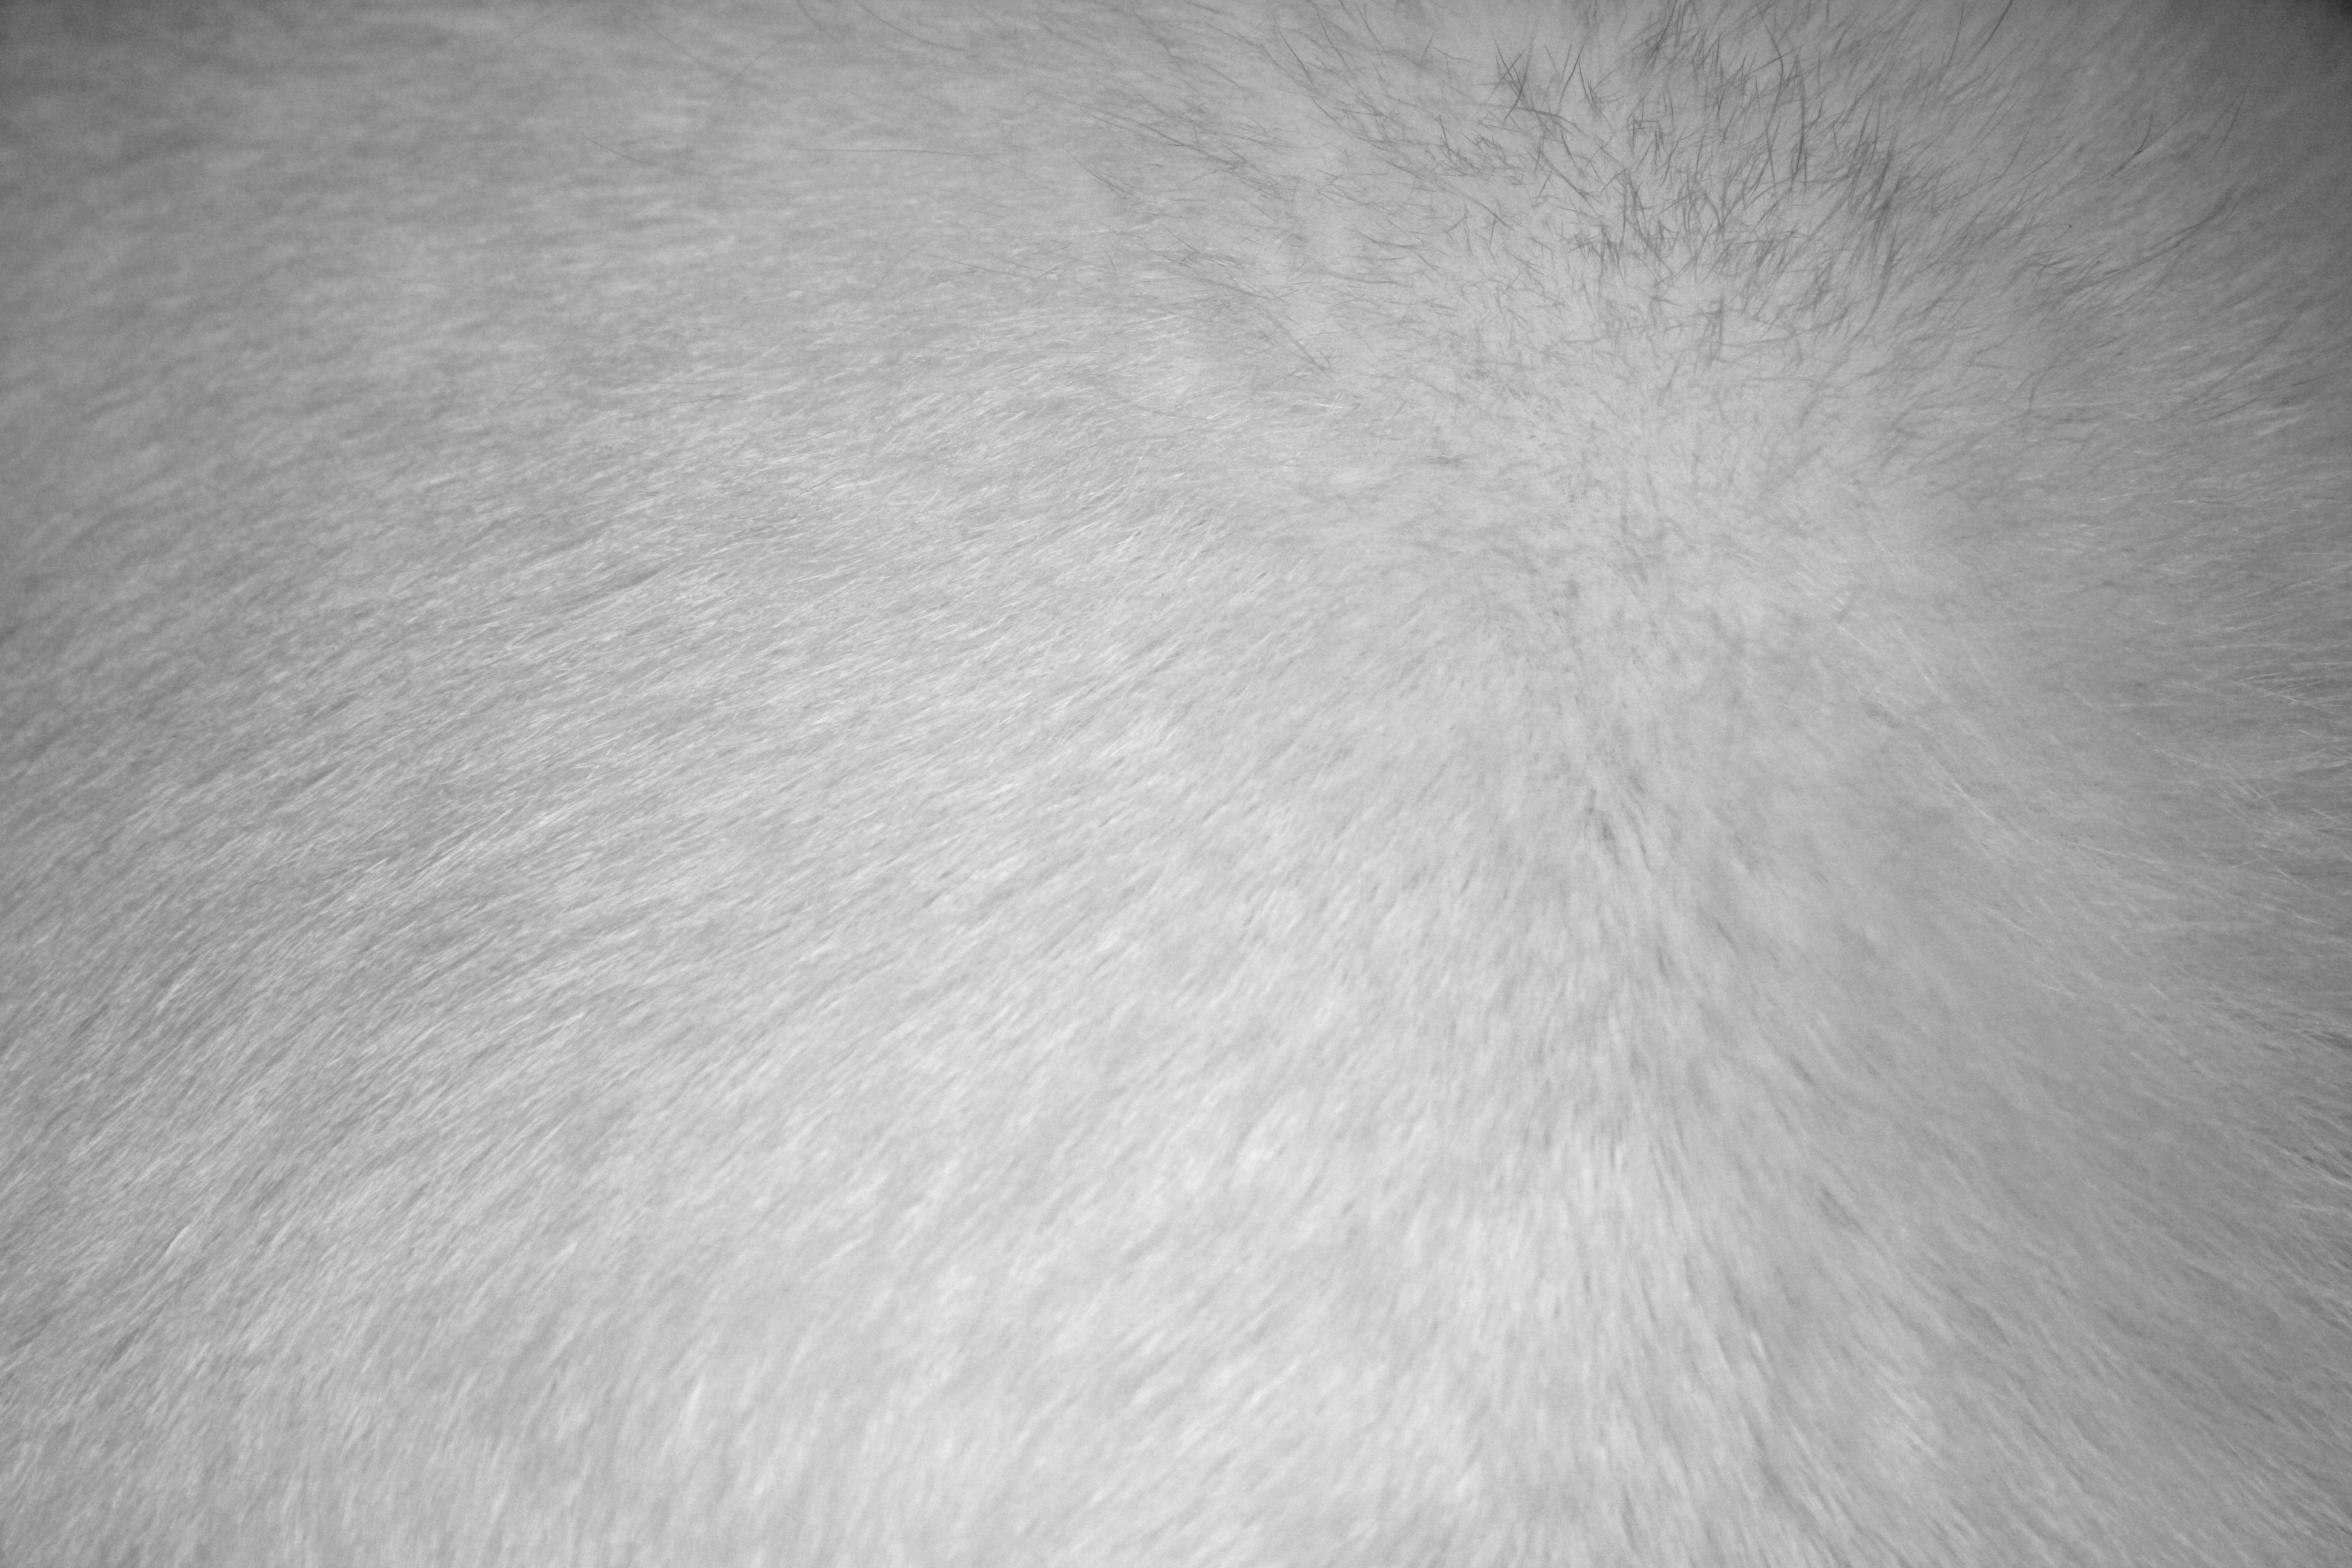 White Fur Texture   Free High Resolution Photo   Dimensions 3888